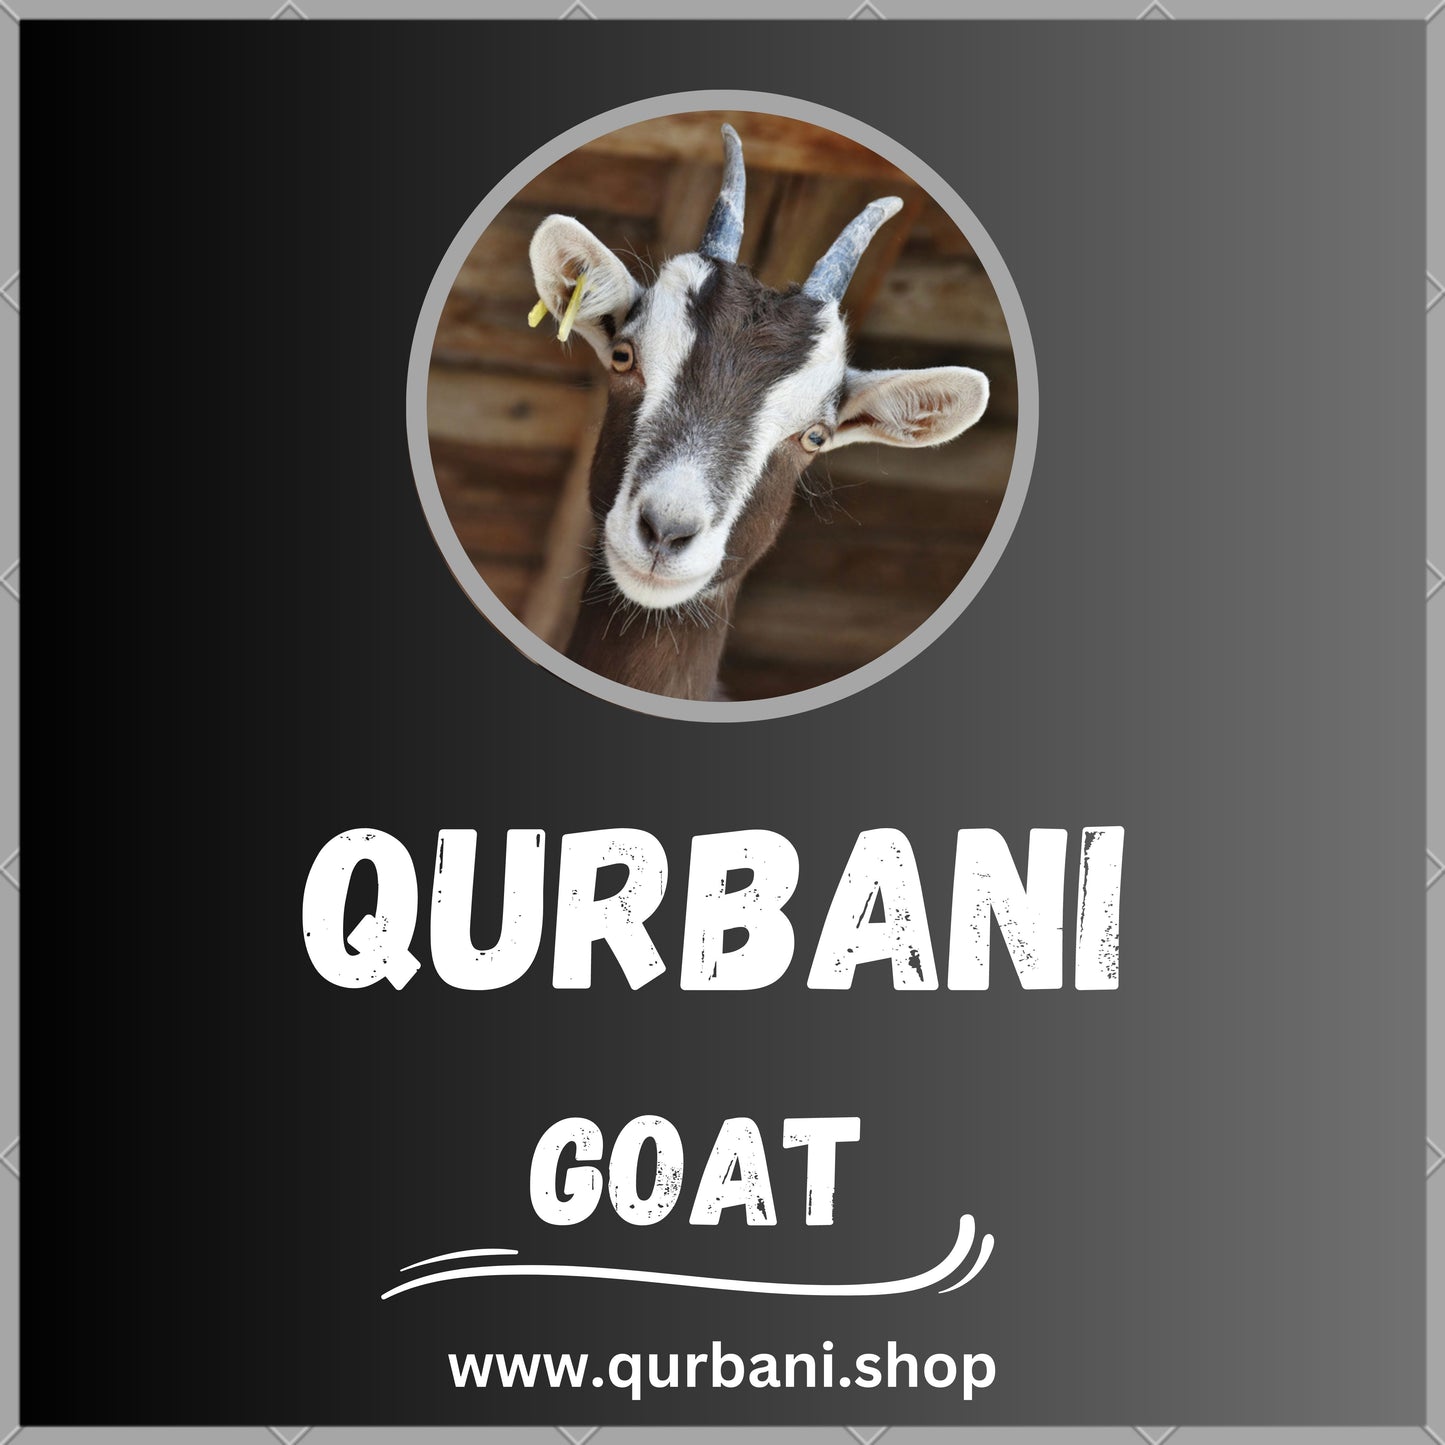 Perform Qurbani in Buffalo - Book Your Eid Sacrifice